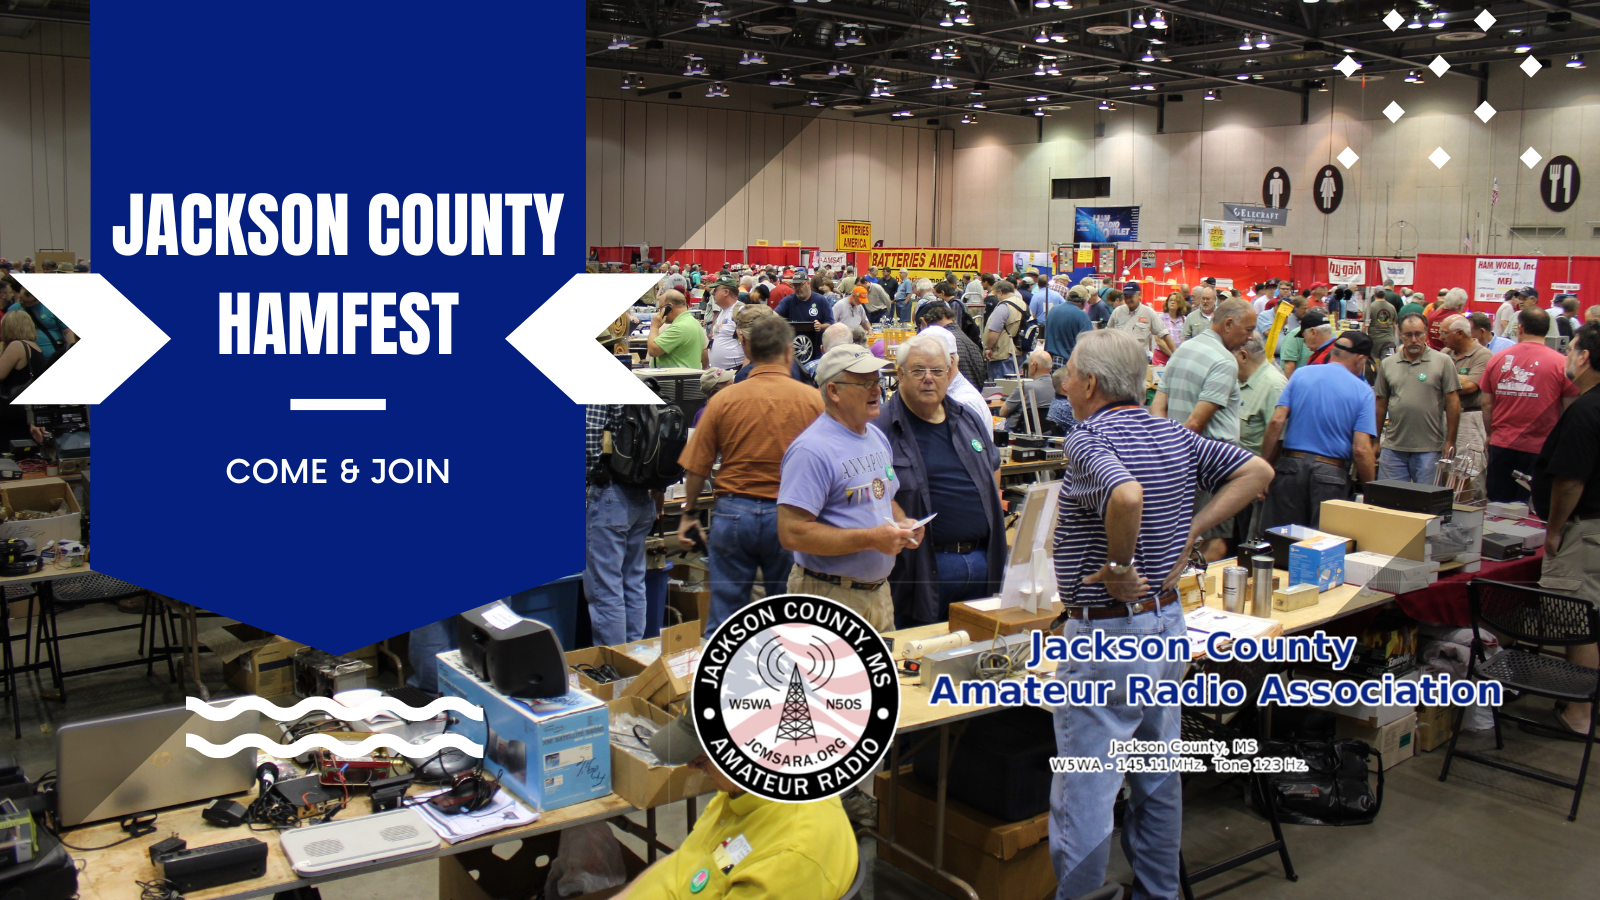 The Jackson County Amateur Radio Association Hamfest